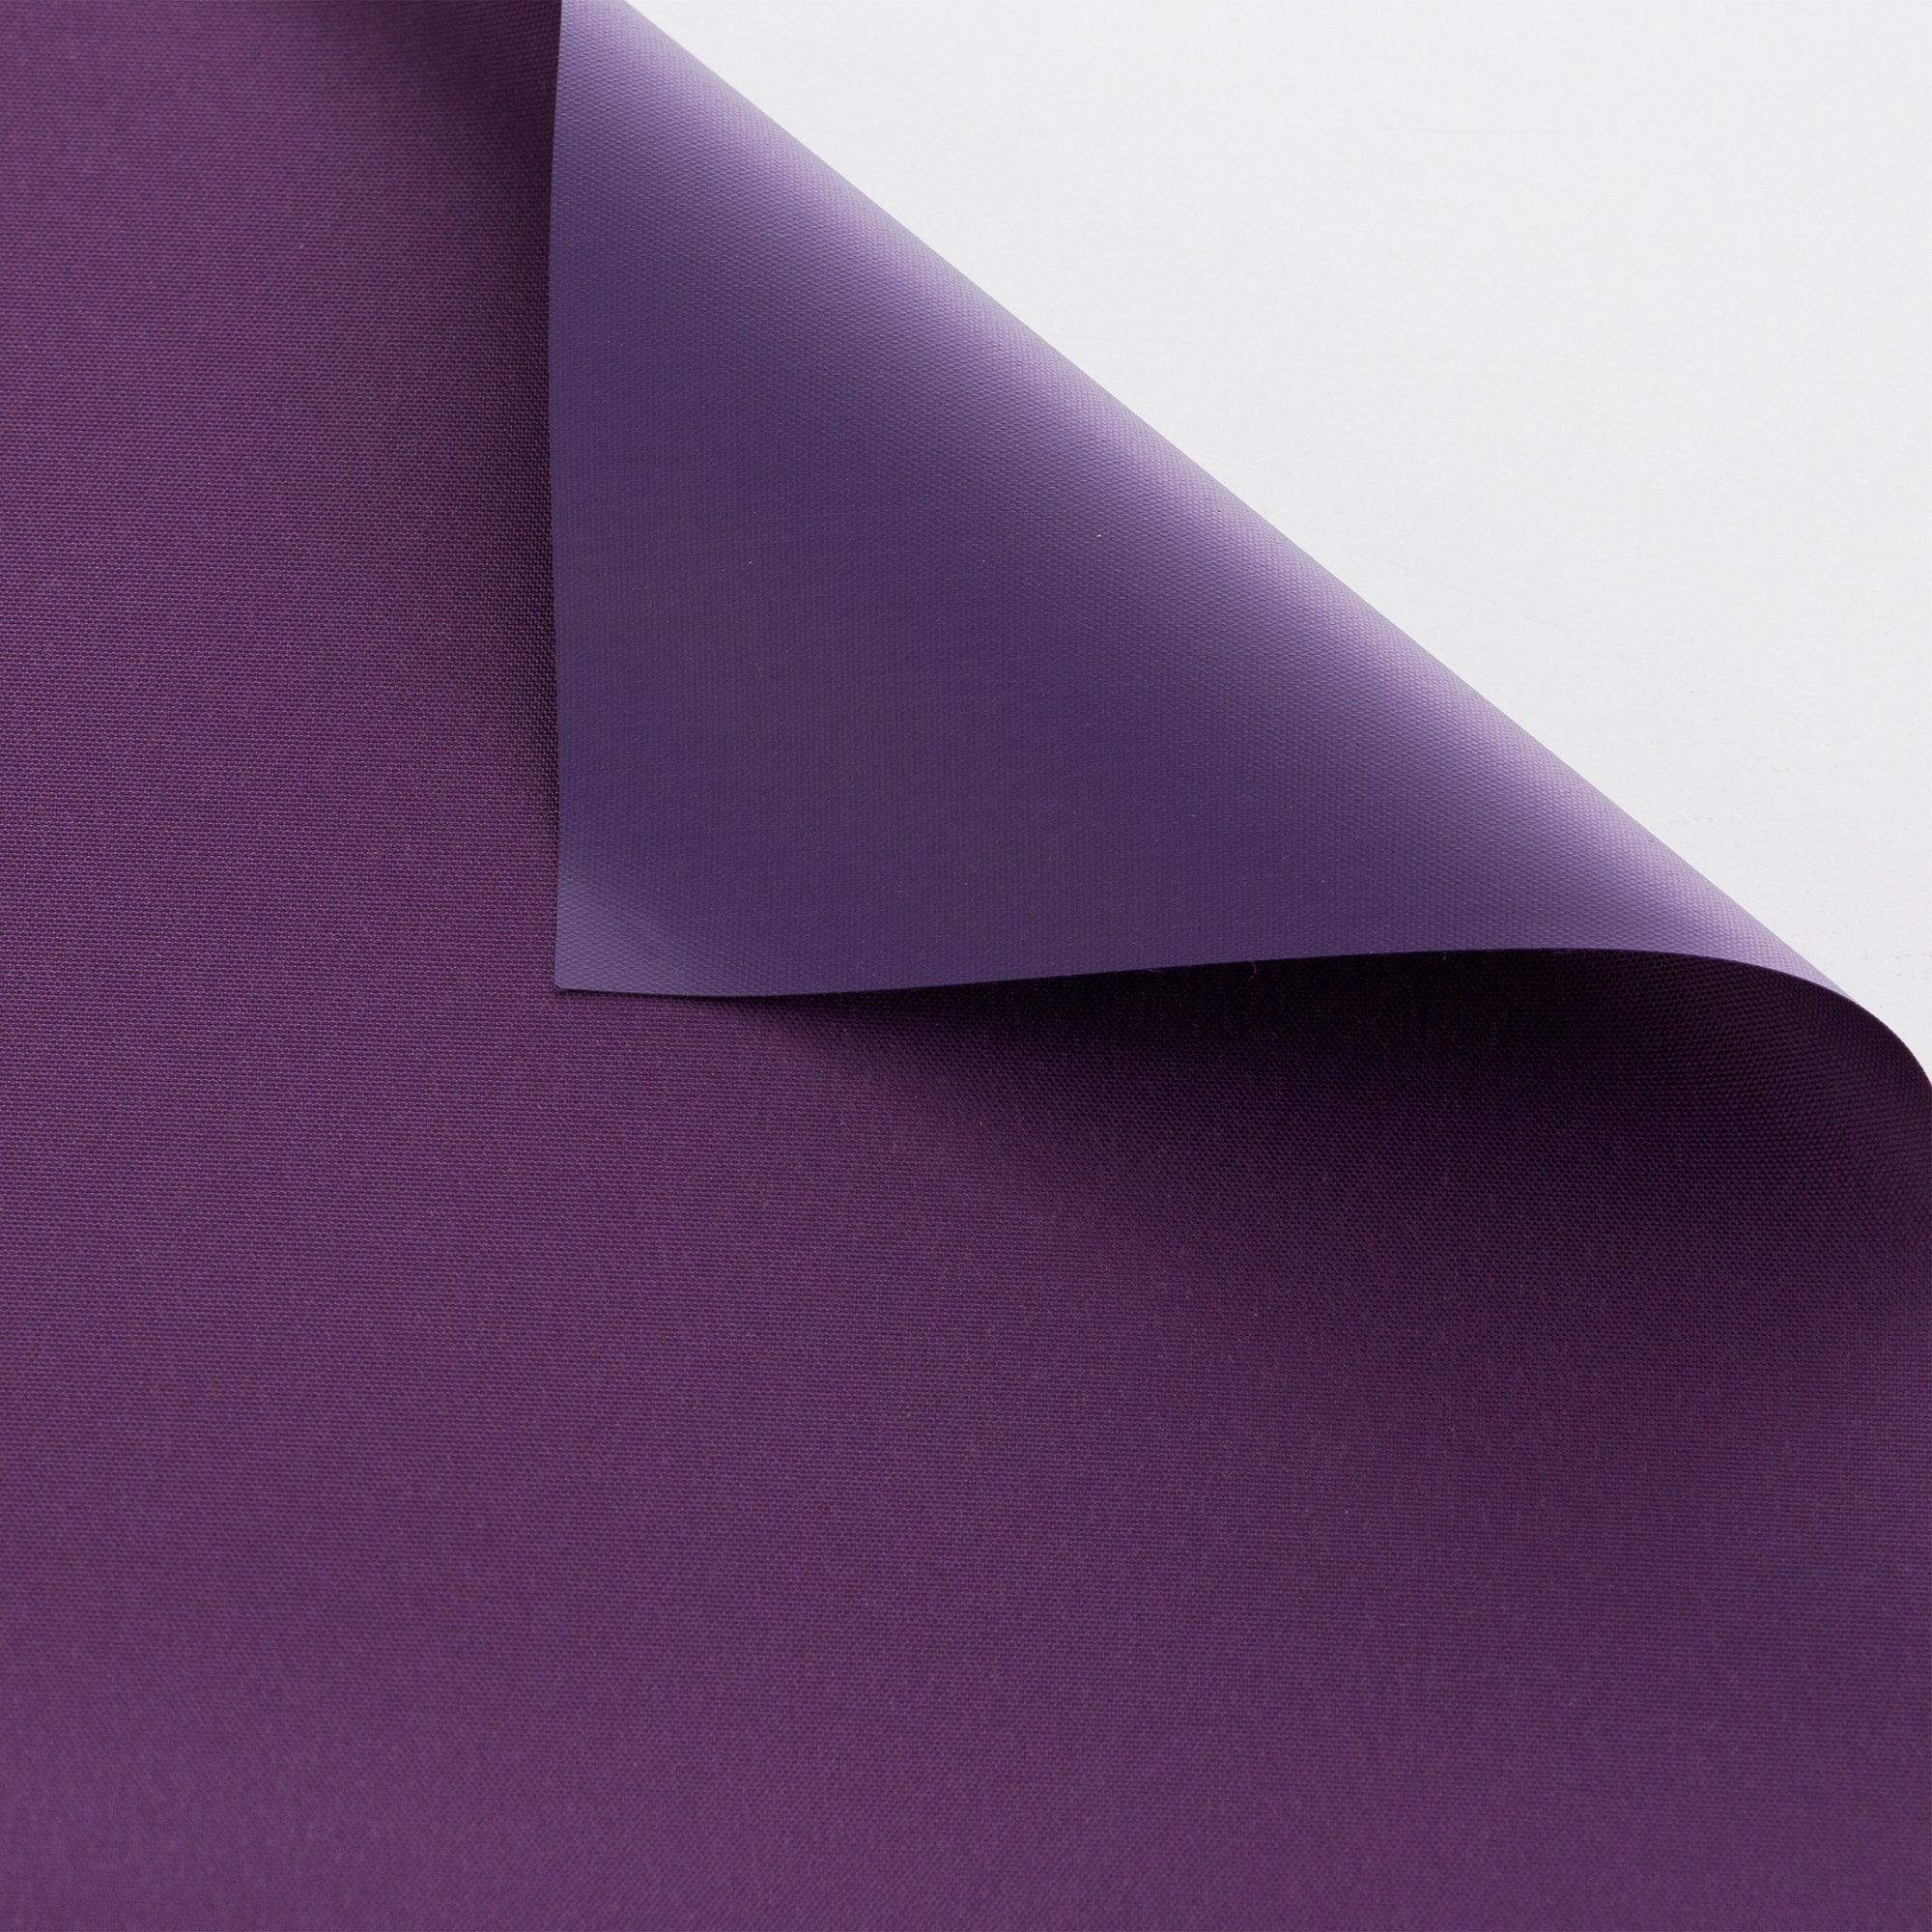 Blindecor Estor Liso Opaco Blackout Modelo Draco Violeta - Eiffel Textile